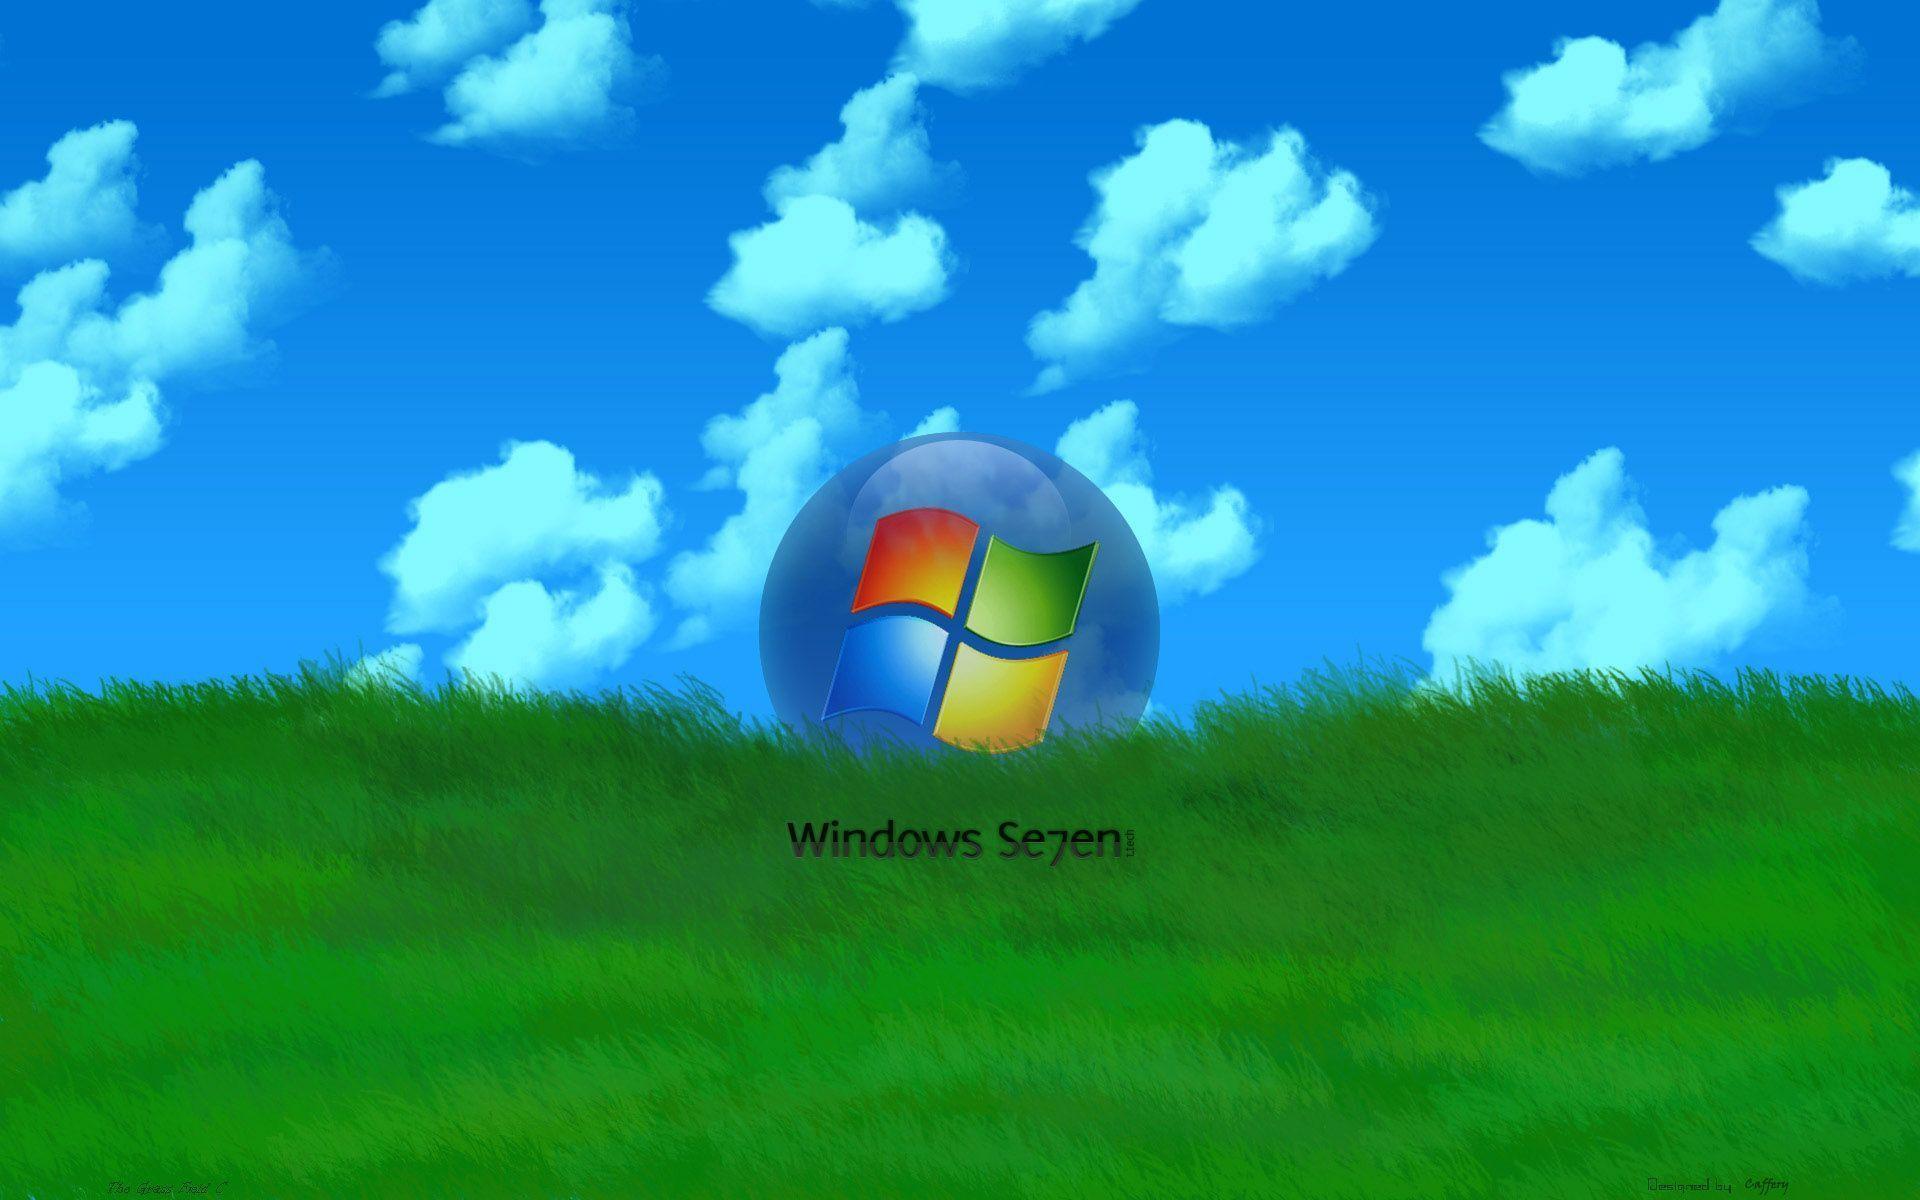 Free Microsoft Desktop Backgrounds